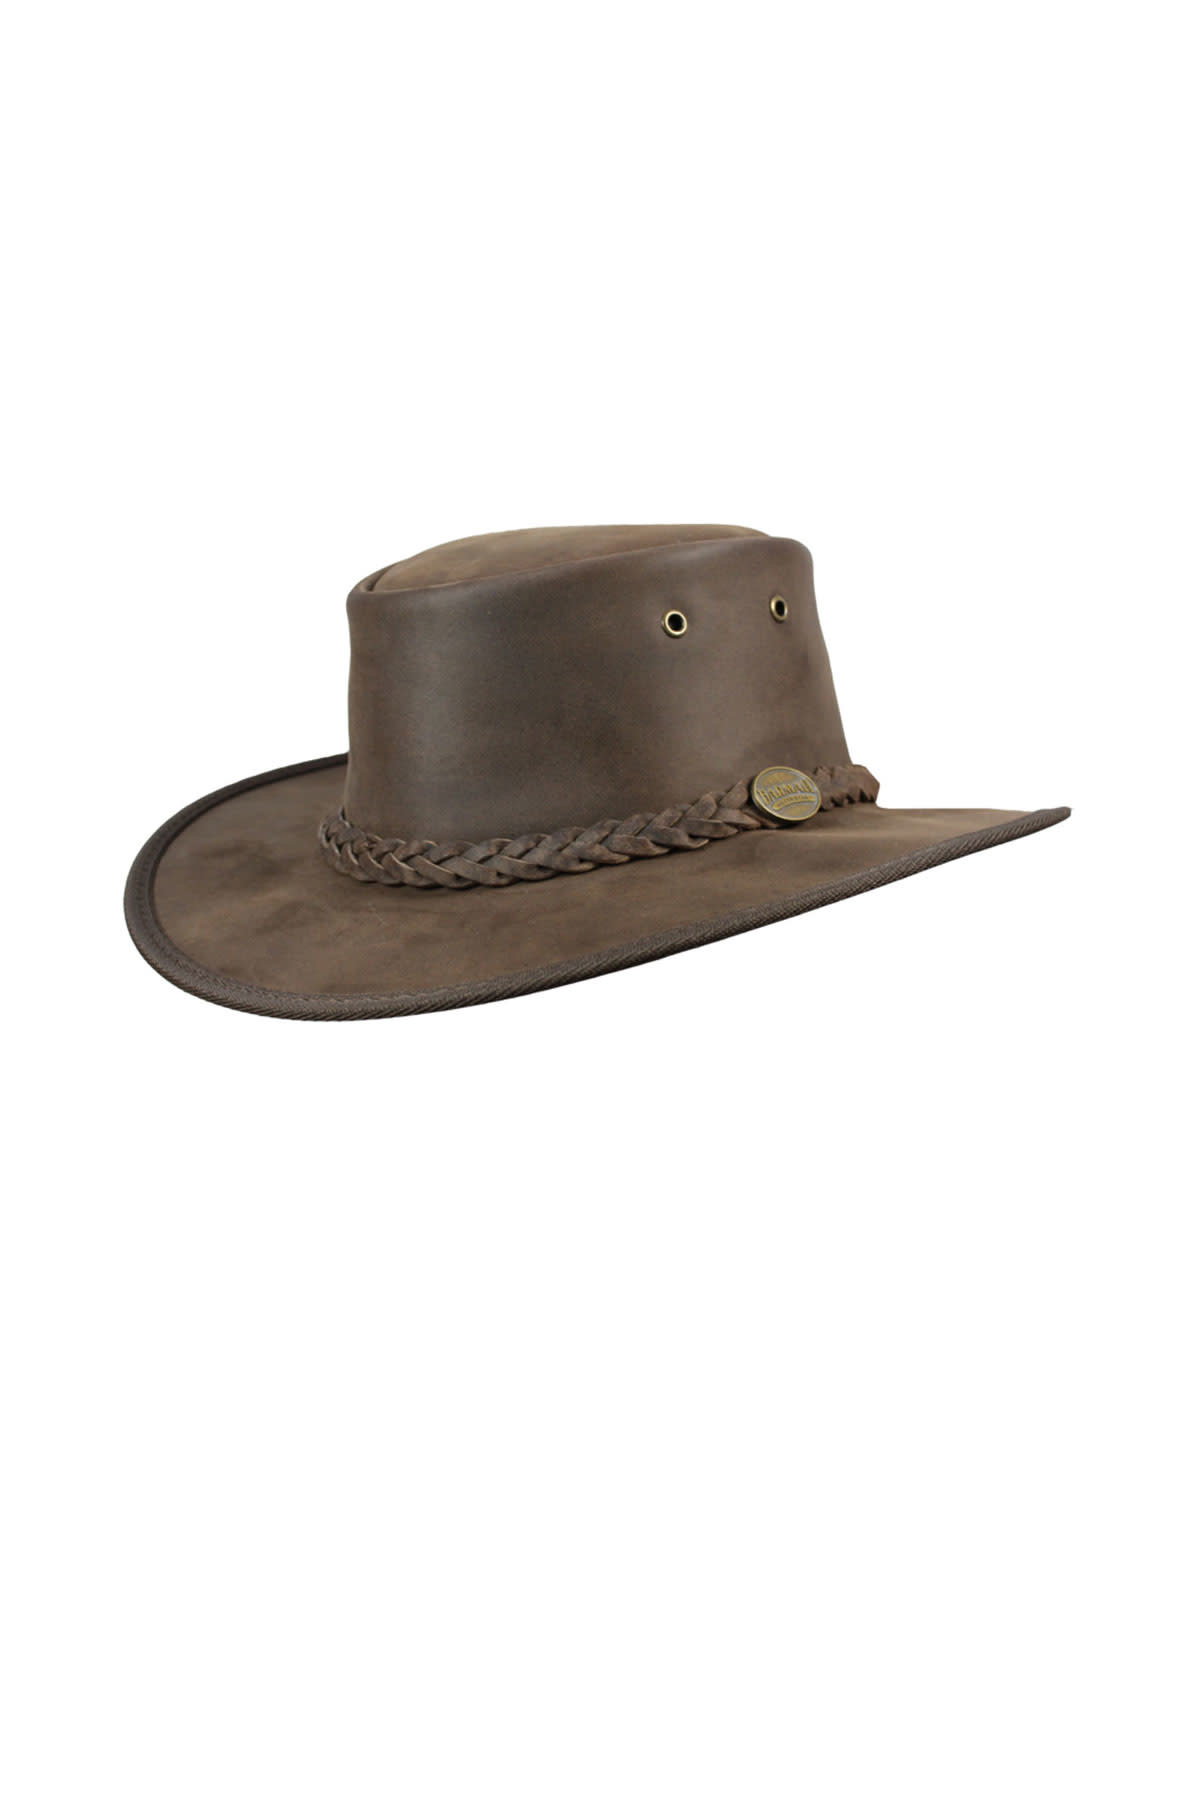 Barmah Foldaway Bronco Hat  Roxann's Hats Fort Langley - Roxanns